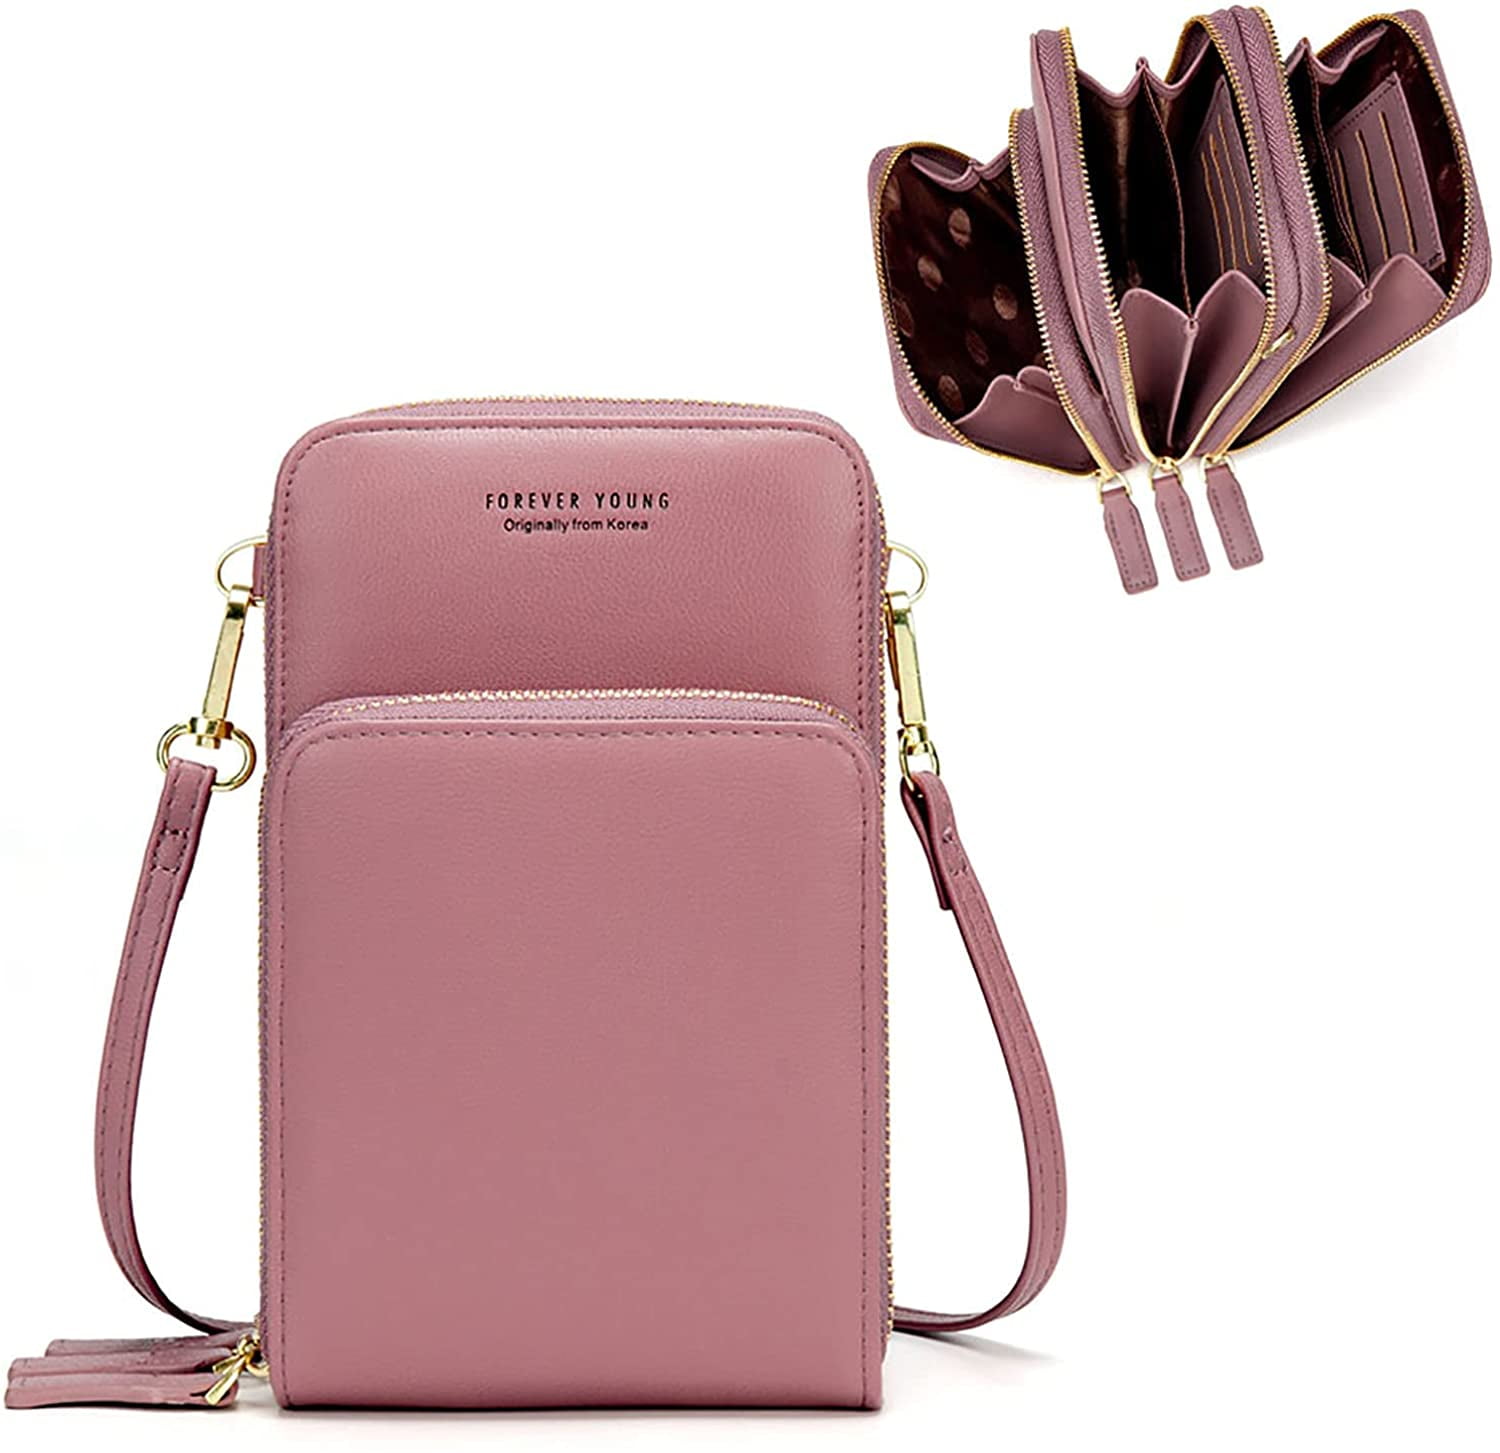 Gifts Women Girls Handbags Cell Phone Bag Small Flap Shoulder Bag Mini Clutch 